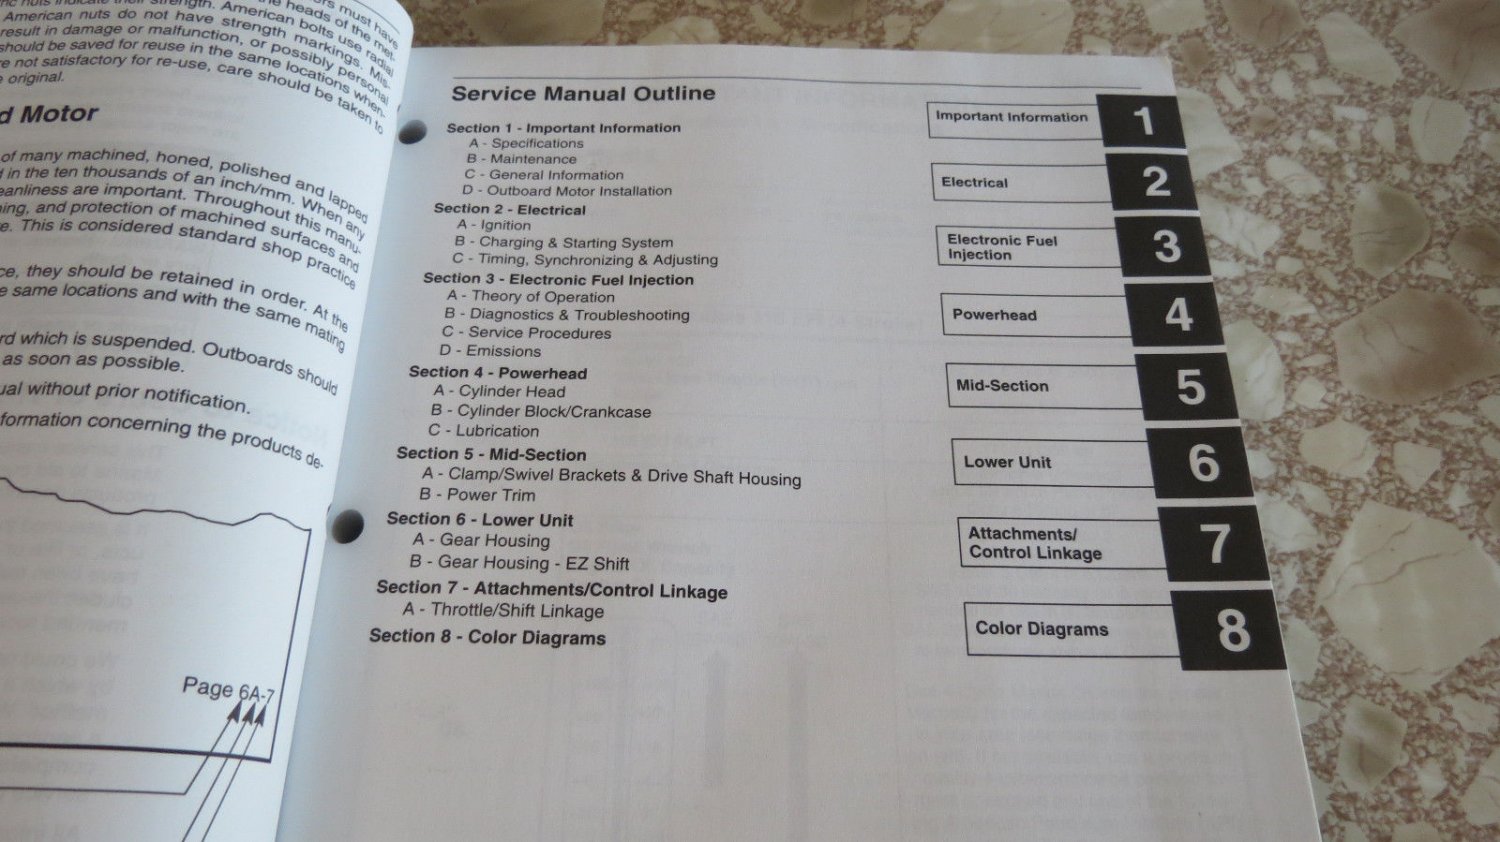 Used OEM 2001 Mercury 115 Hp Four stroke EFI Service Manual 90-881980 958